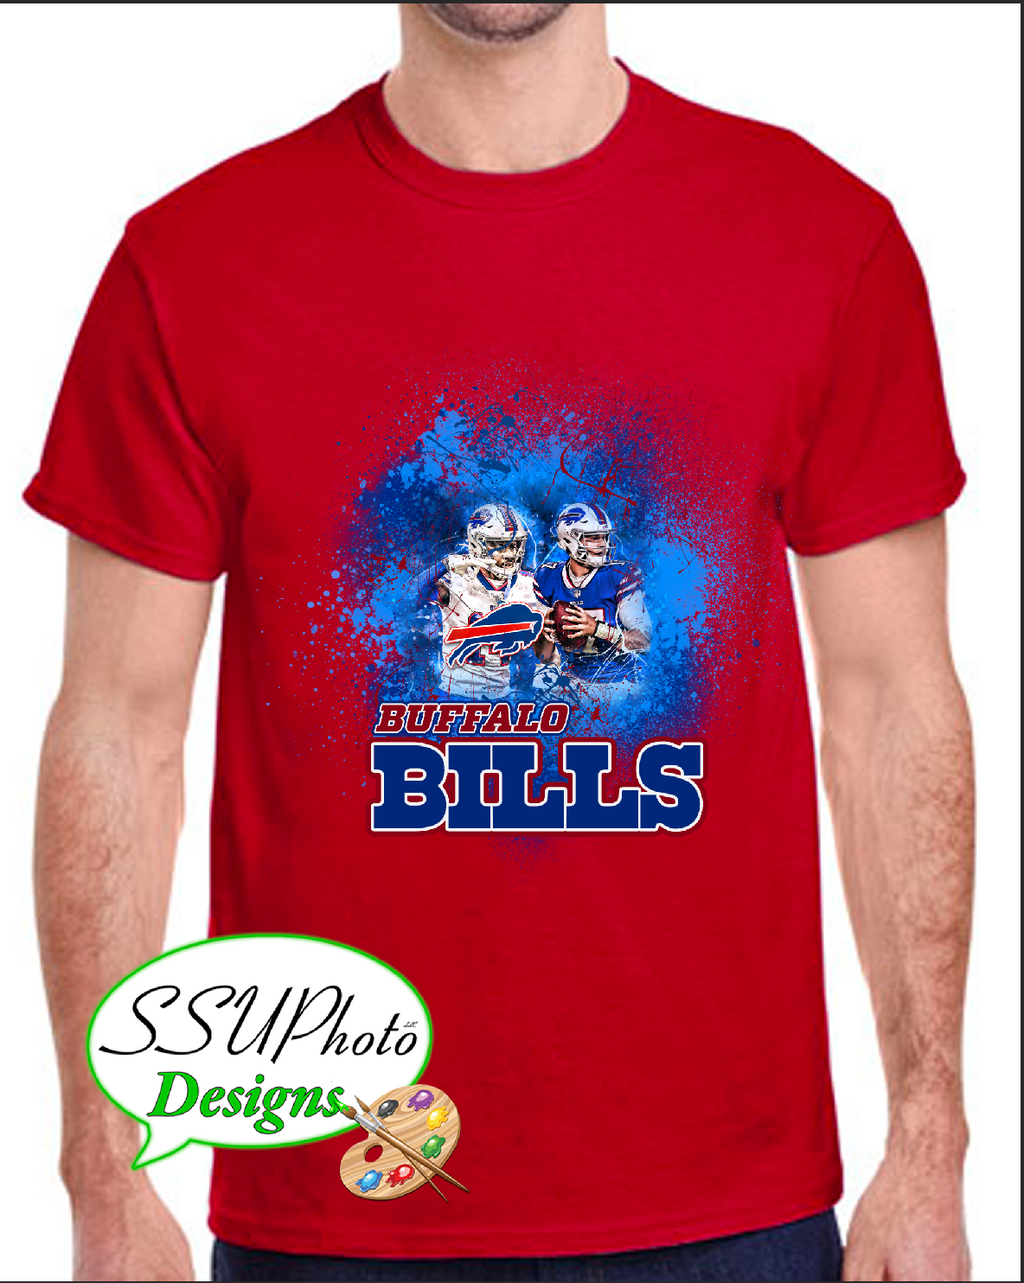 Bills Shirt Design Digital Design